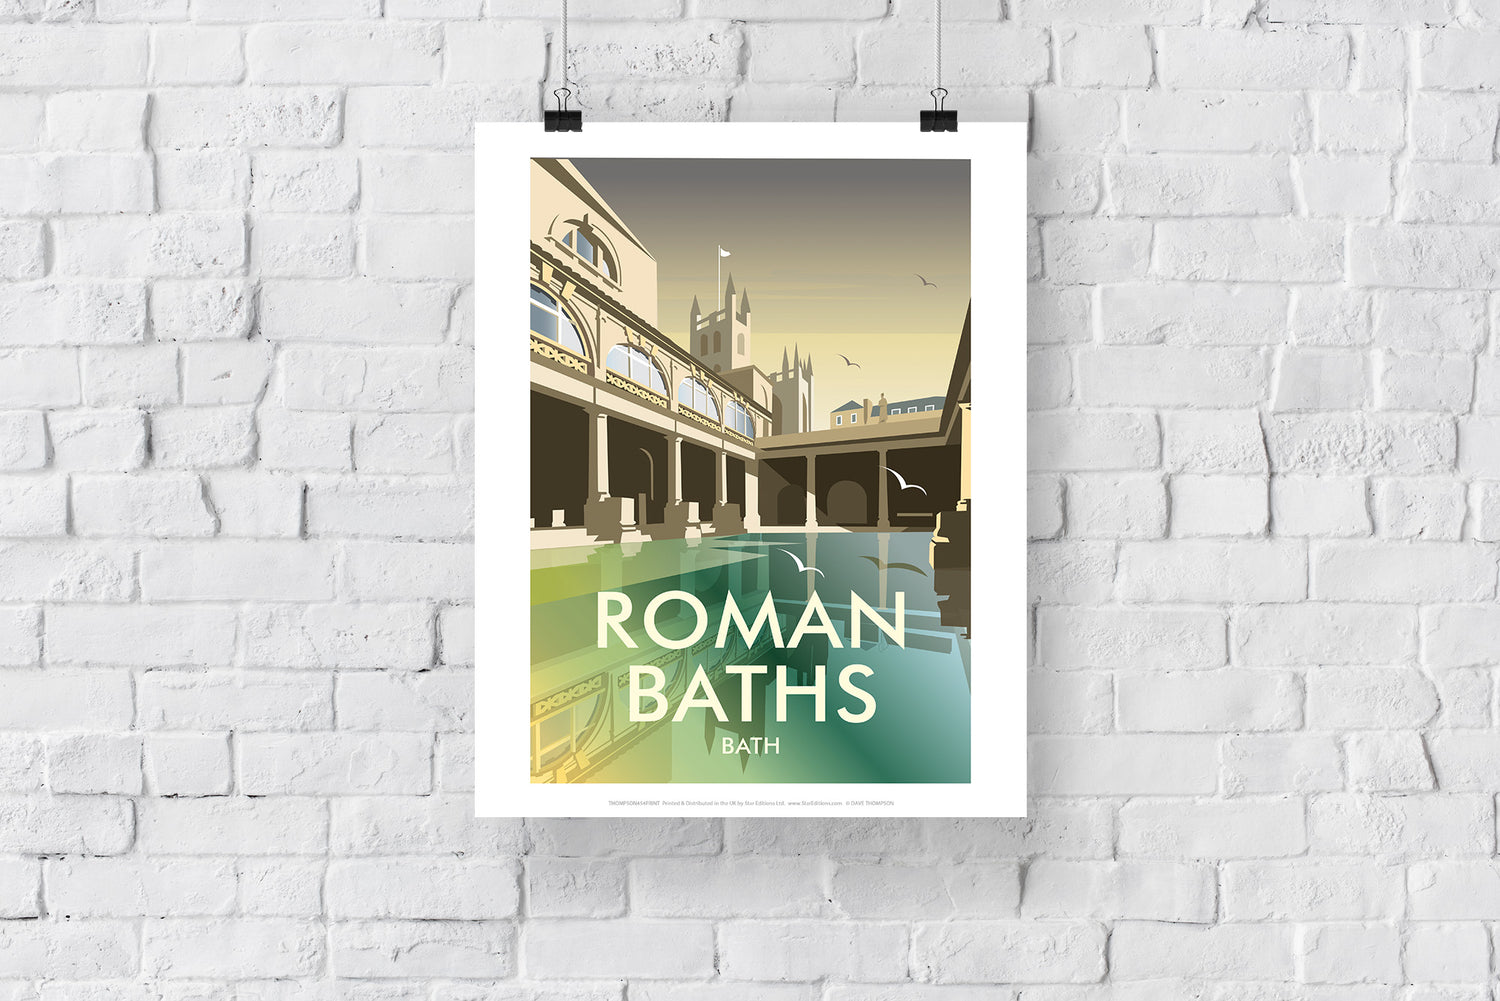 Roman Baths - Art Print